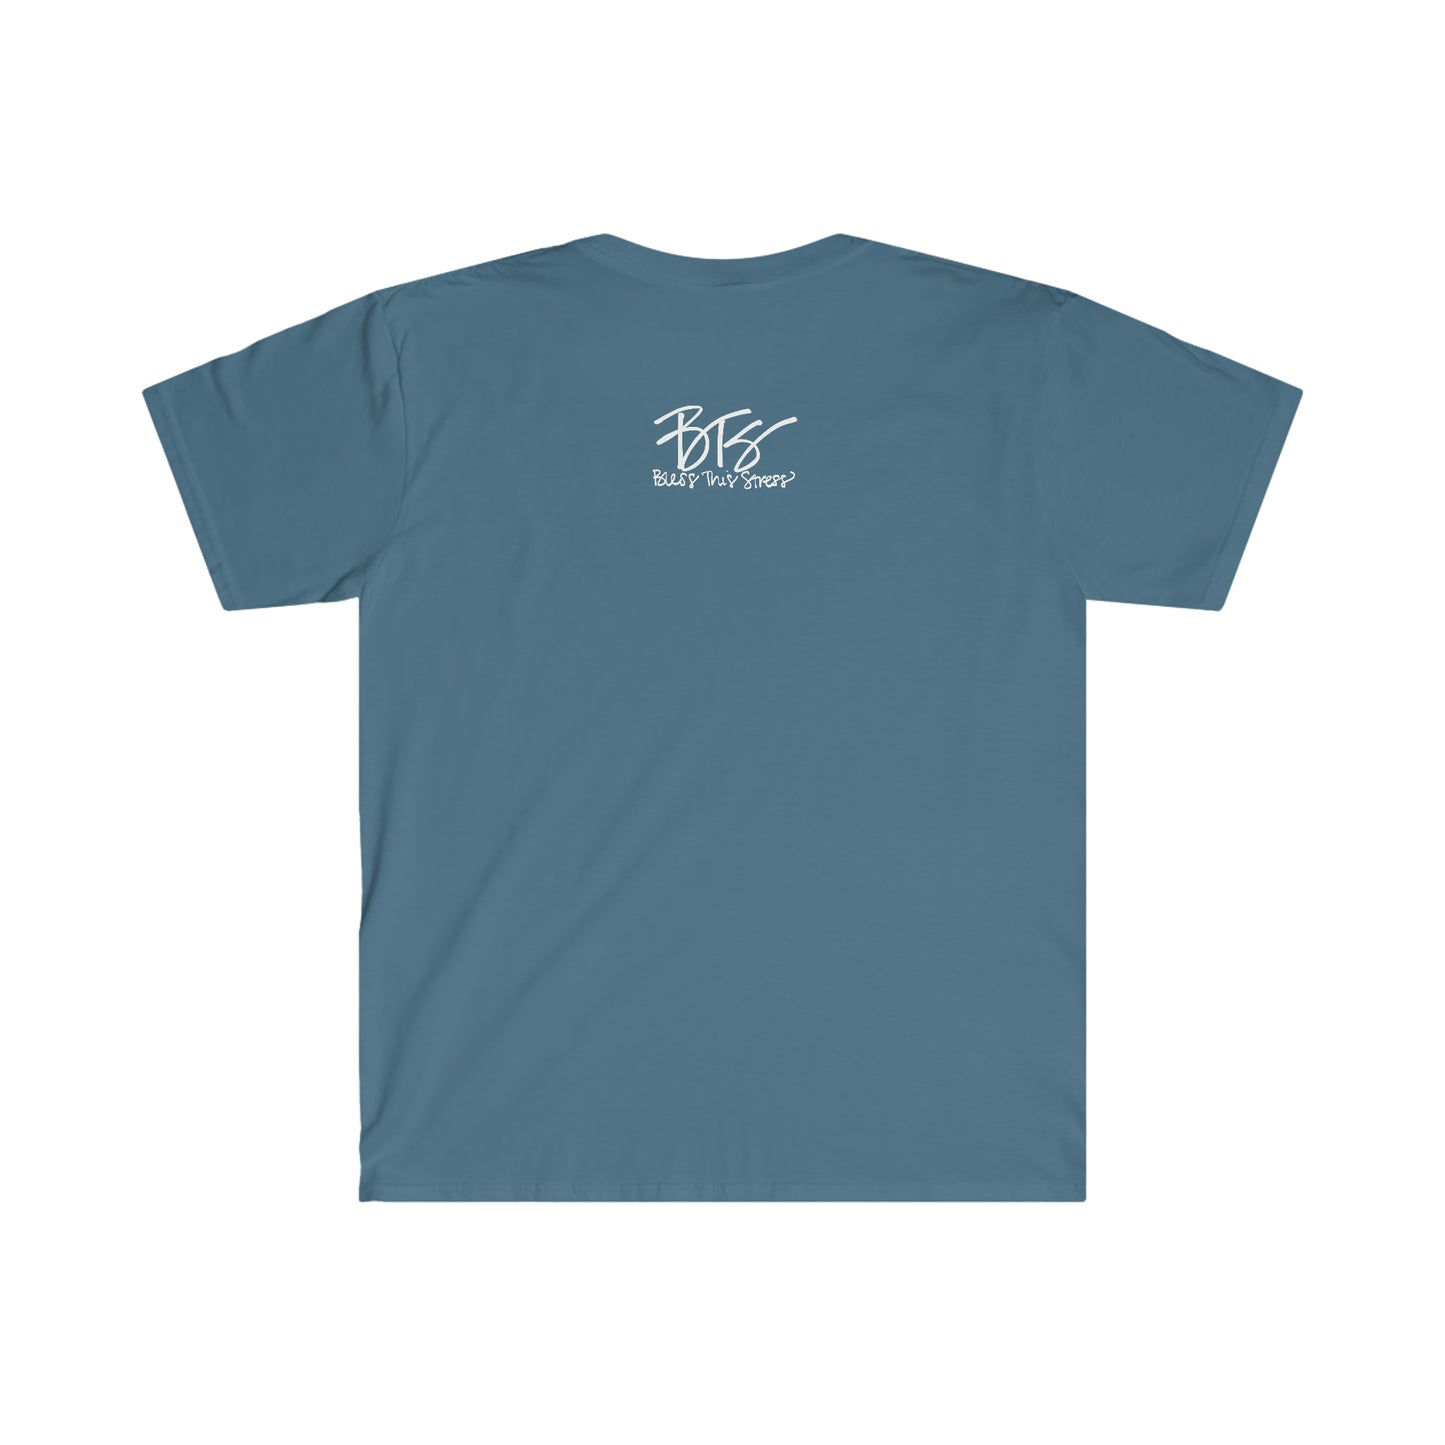 Handwritten "UNCIVILIZED" Unisex Softstyle T-Shirt [white font]